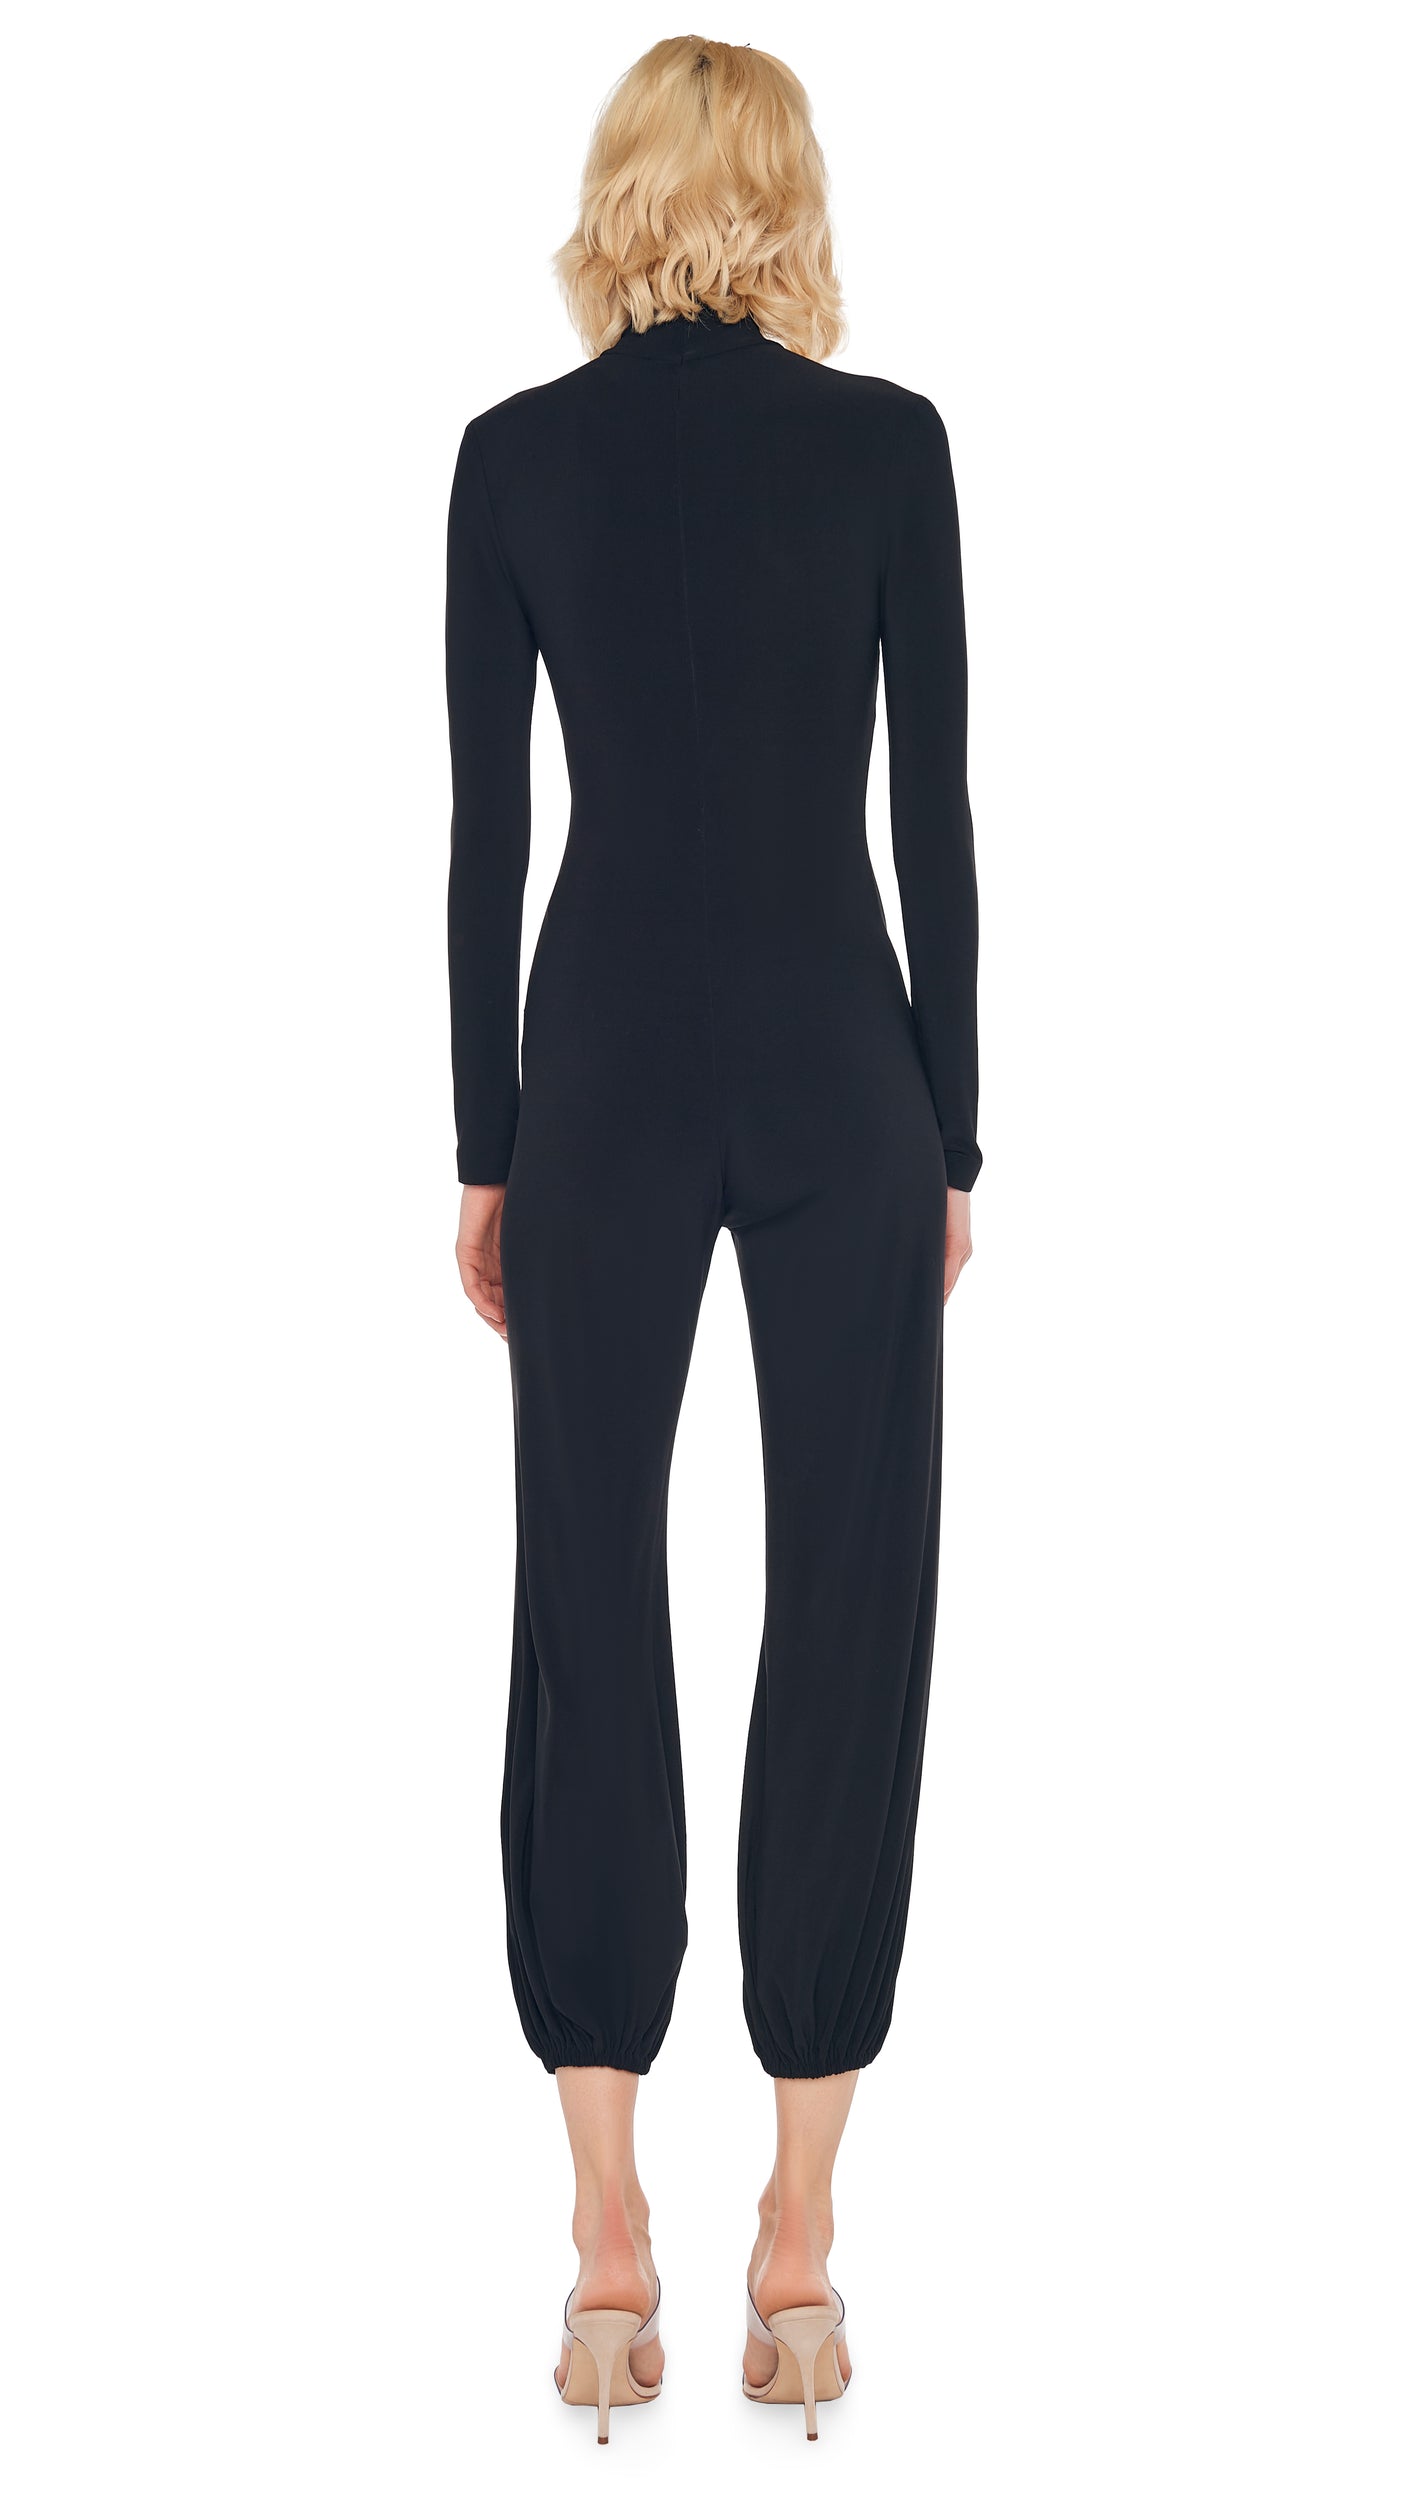 Norma Kamali Women's Long Sleeve Turtleneck Jumpsuit, Black, L